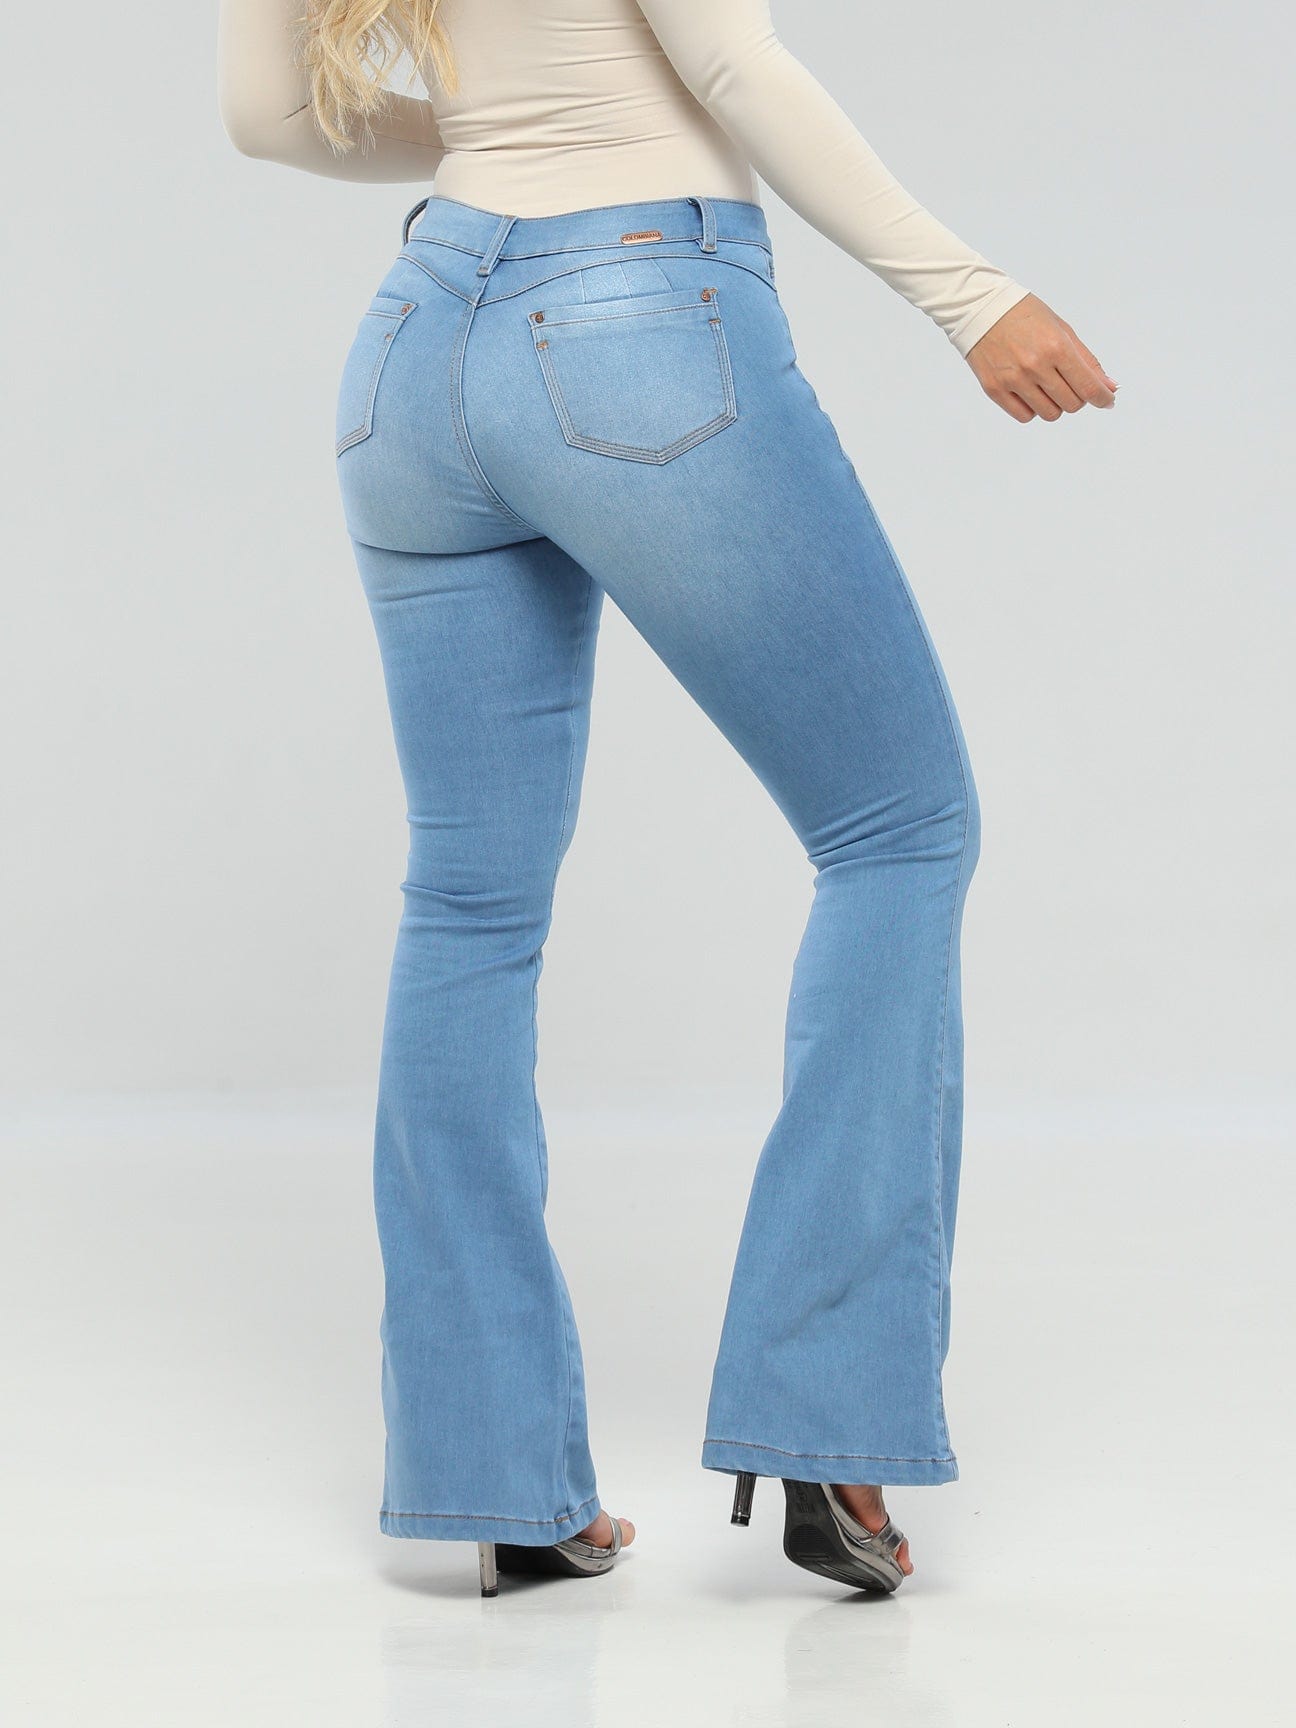 Jeans Colombiano G2256 – Colombian Jeans & Fajas